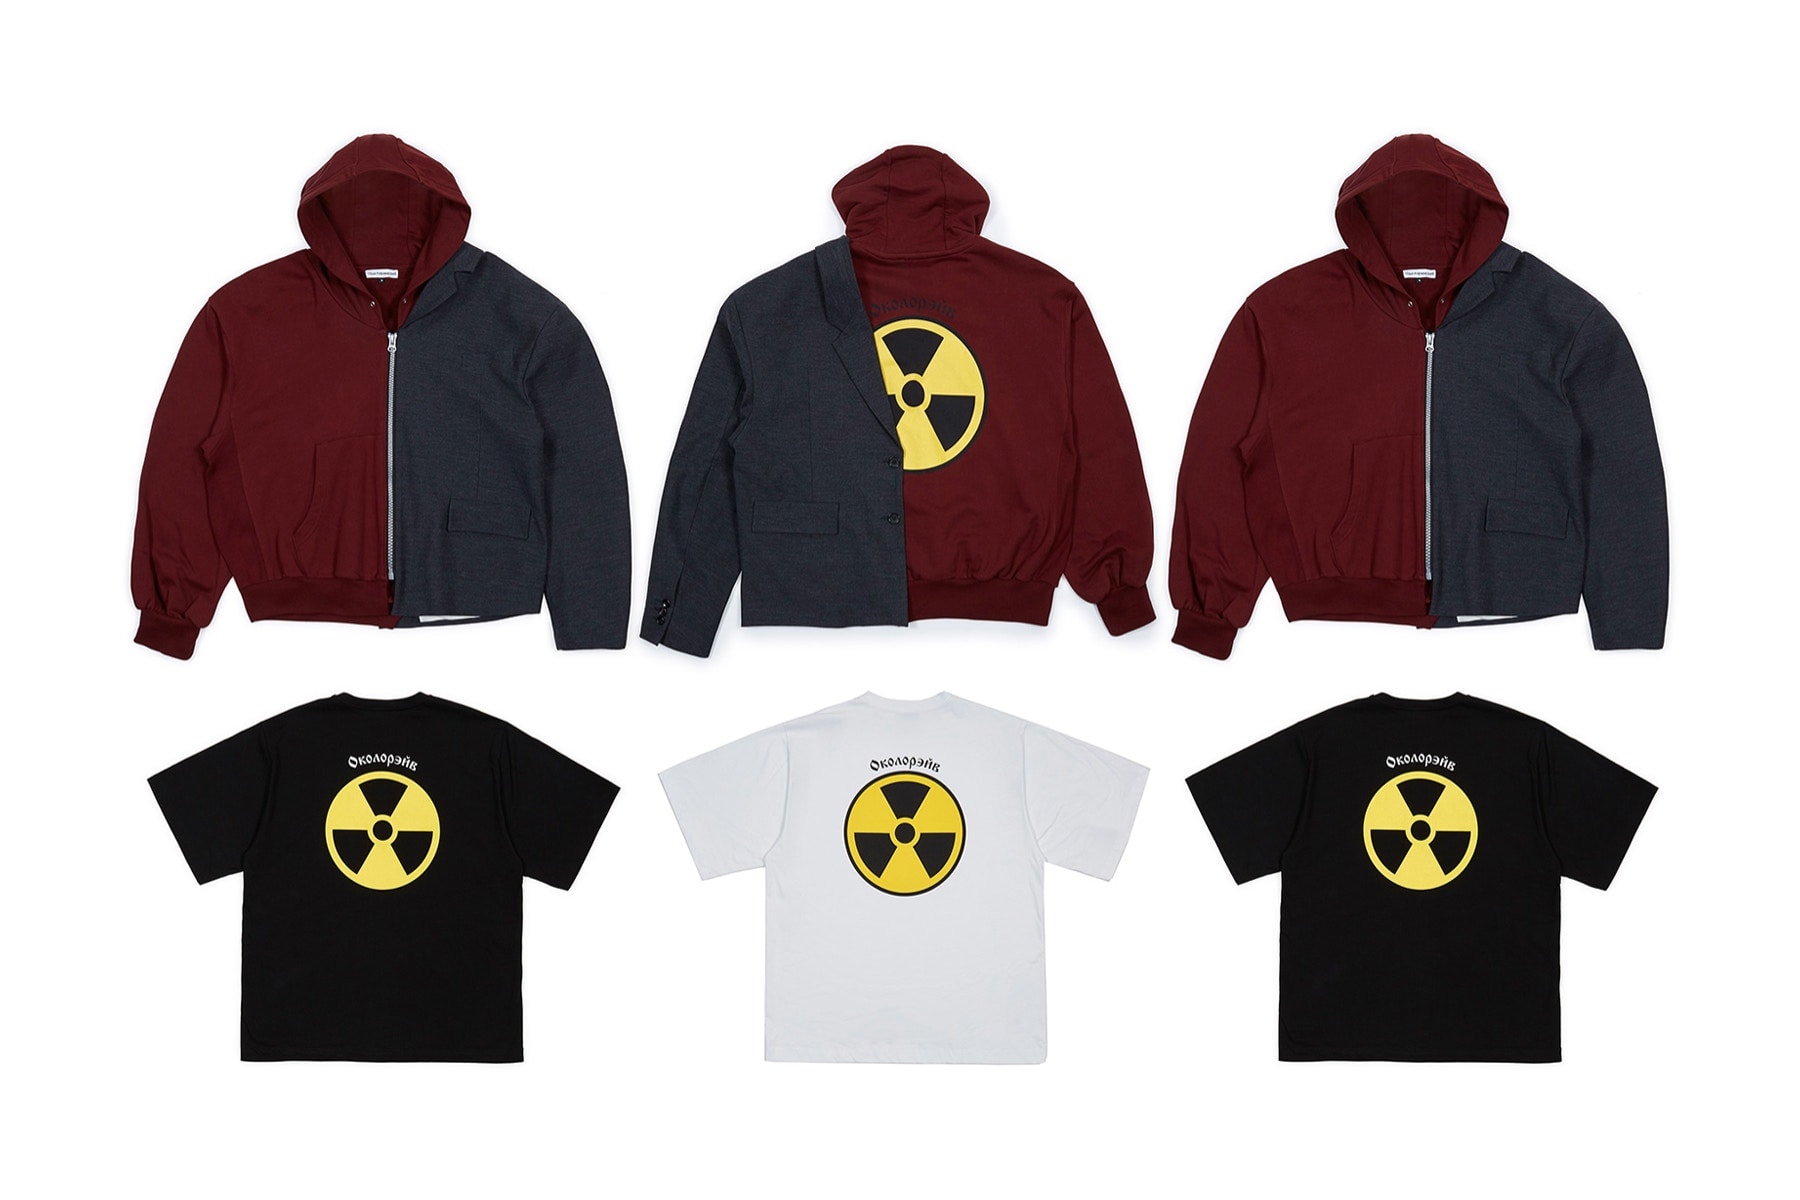 gosha rubchinskiy dsmny dsm dover street market ss18 bombers jackets tees tshirts radioactive blazer